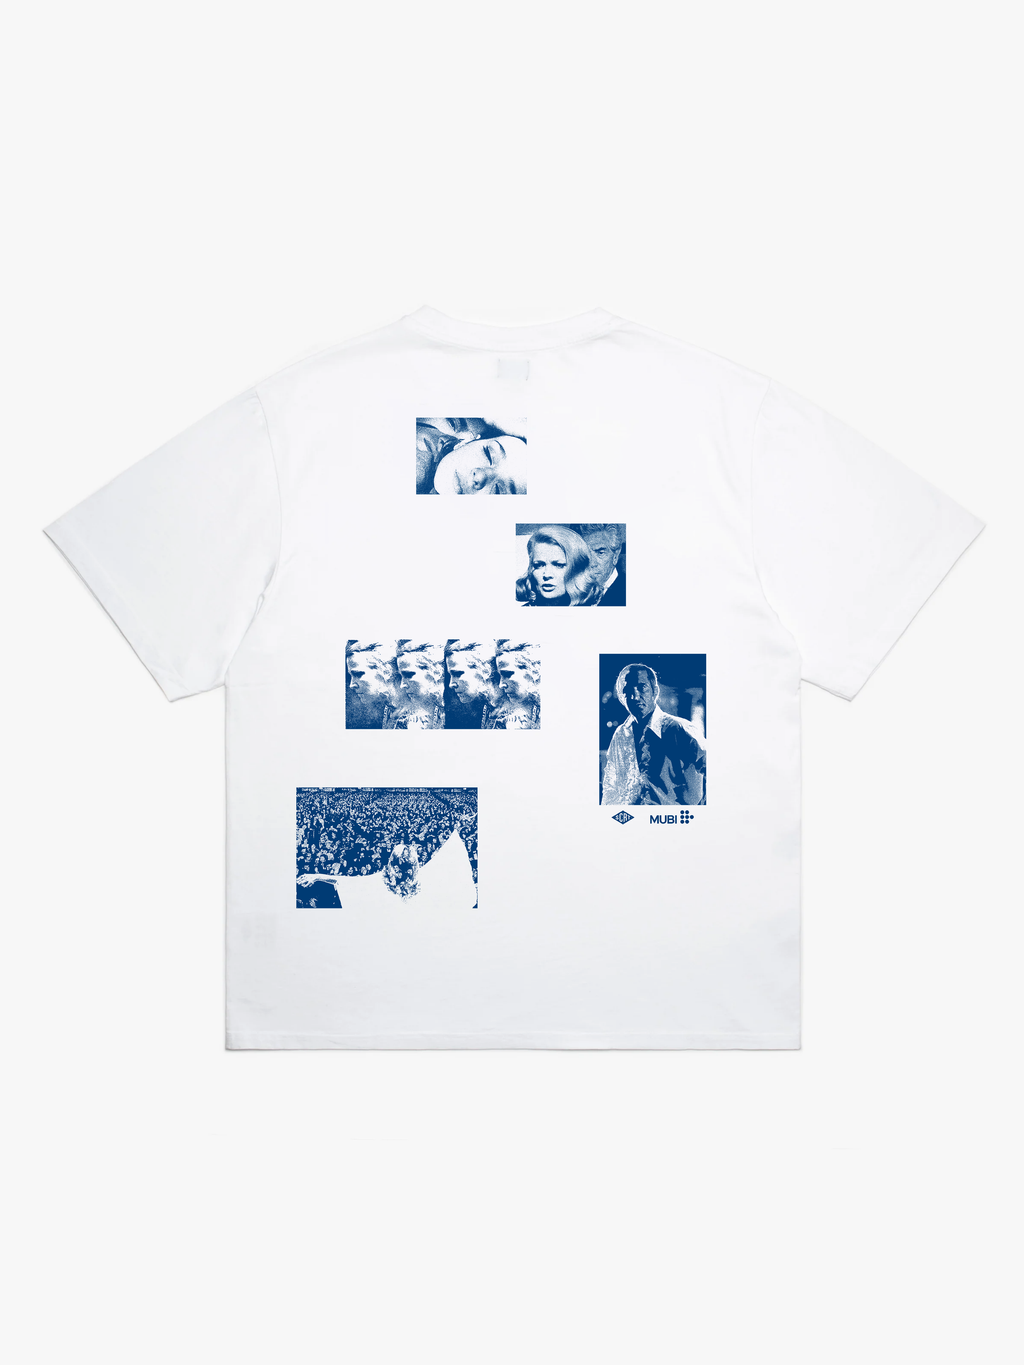 John Cassavetes T-Shirt - White